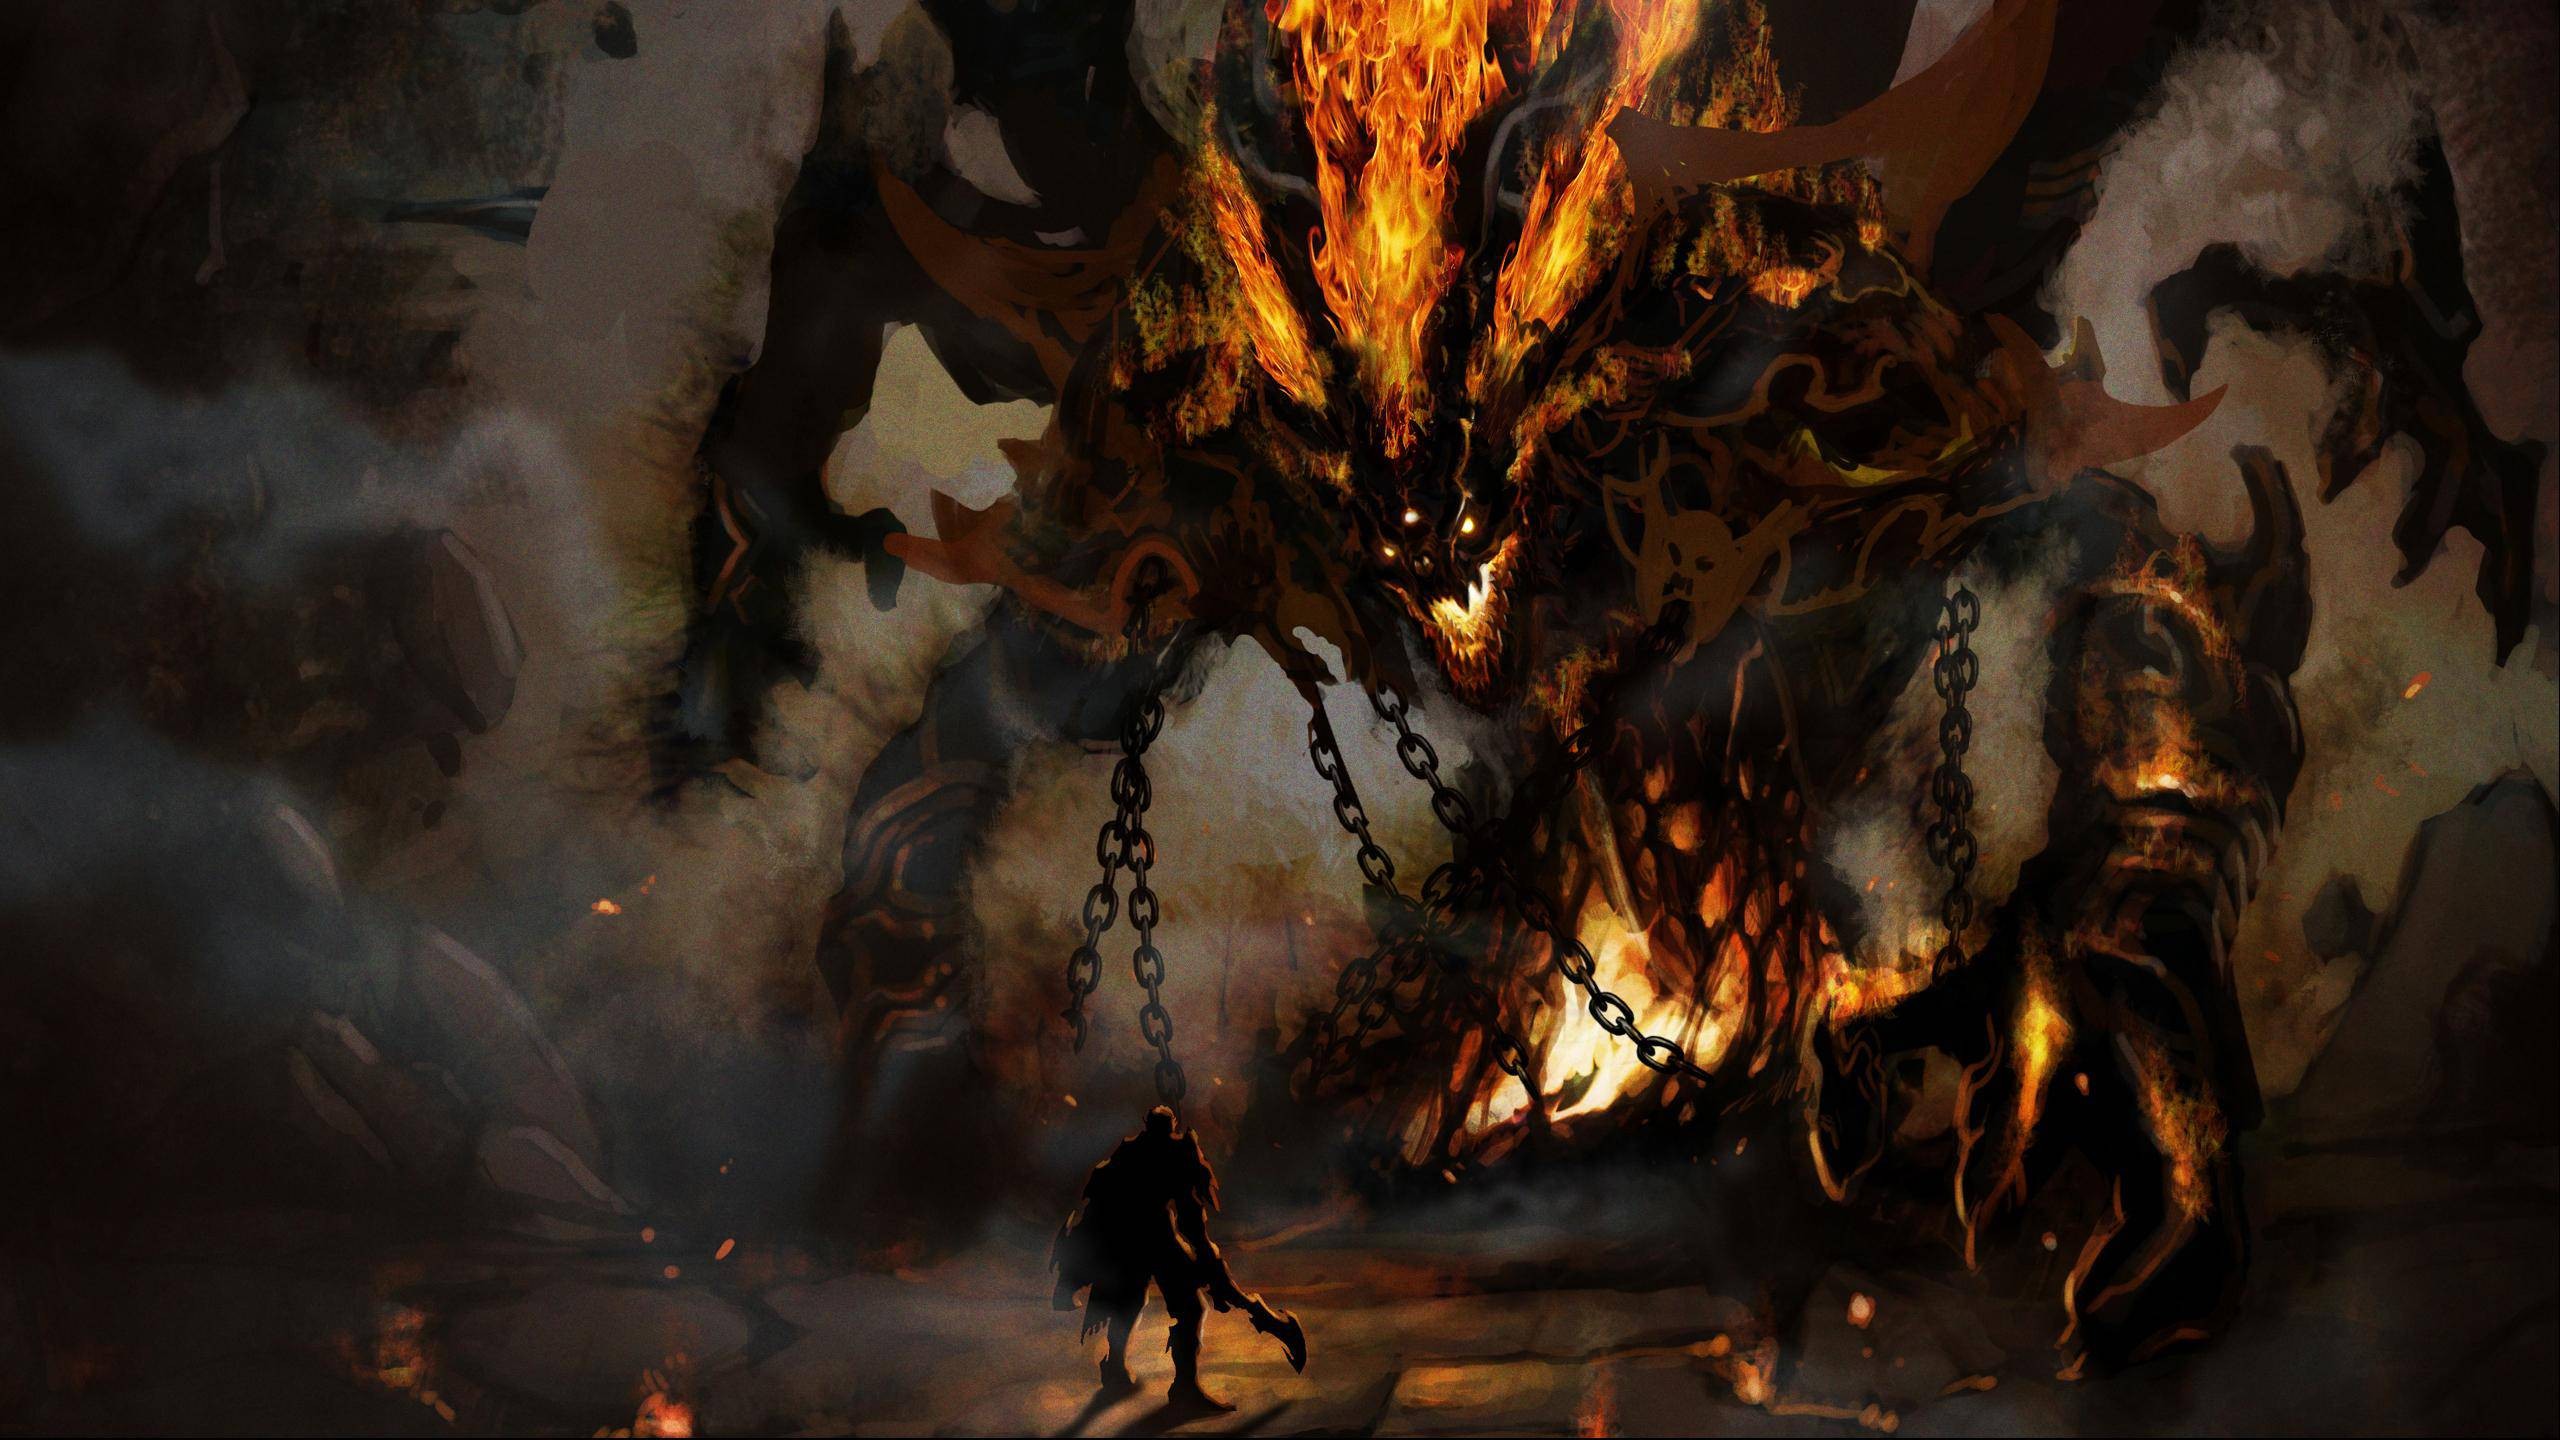 General 2560x1440 digital art fantasy art artwork Balrog demon creature glowing eyes fire